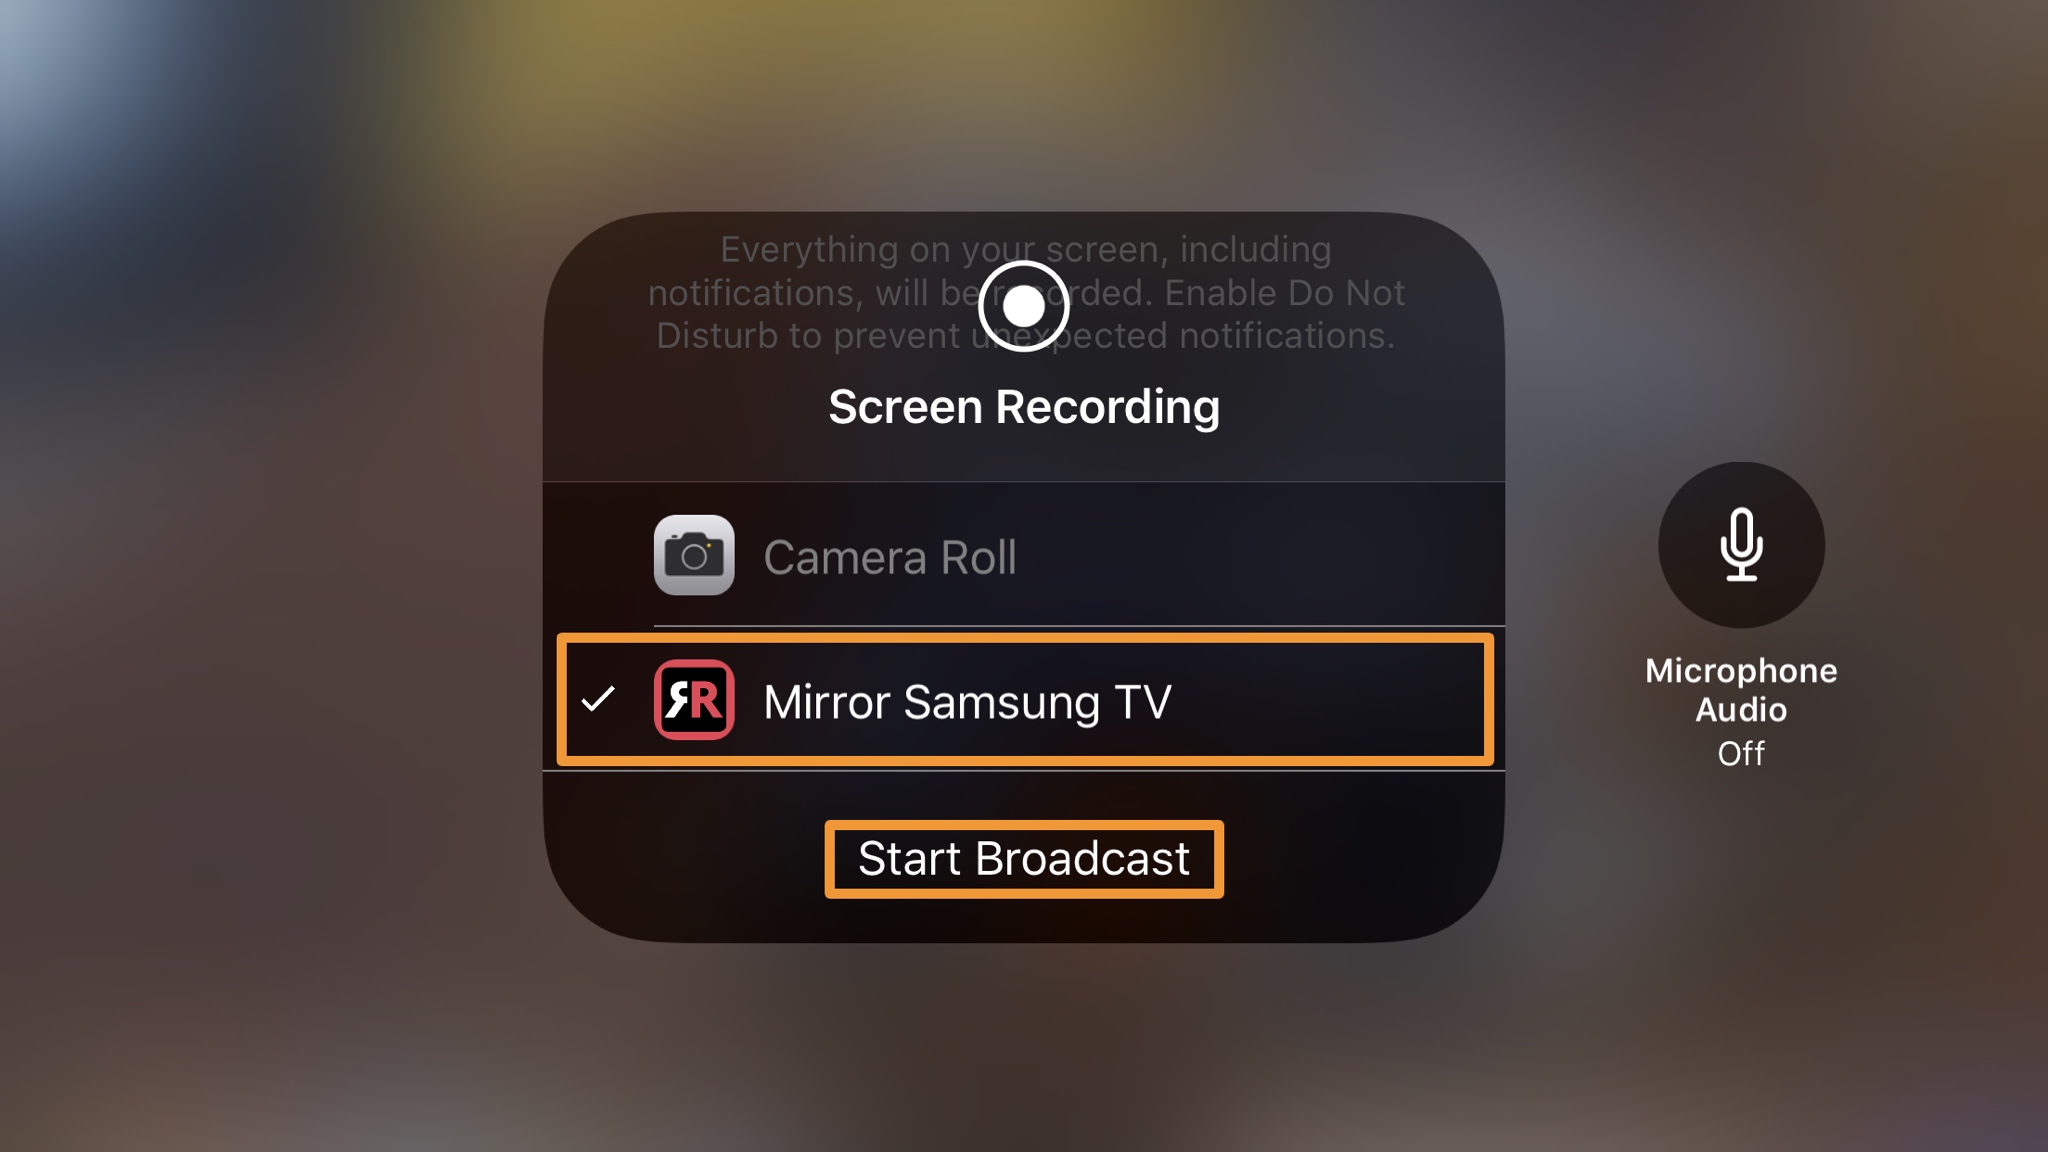 select Samsung TV Mirror option